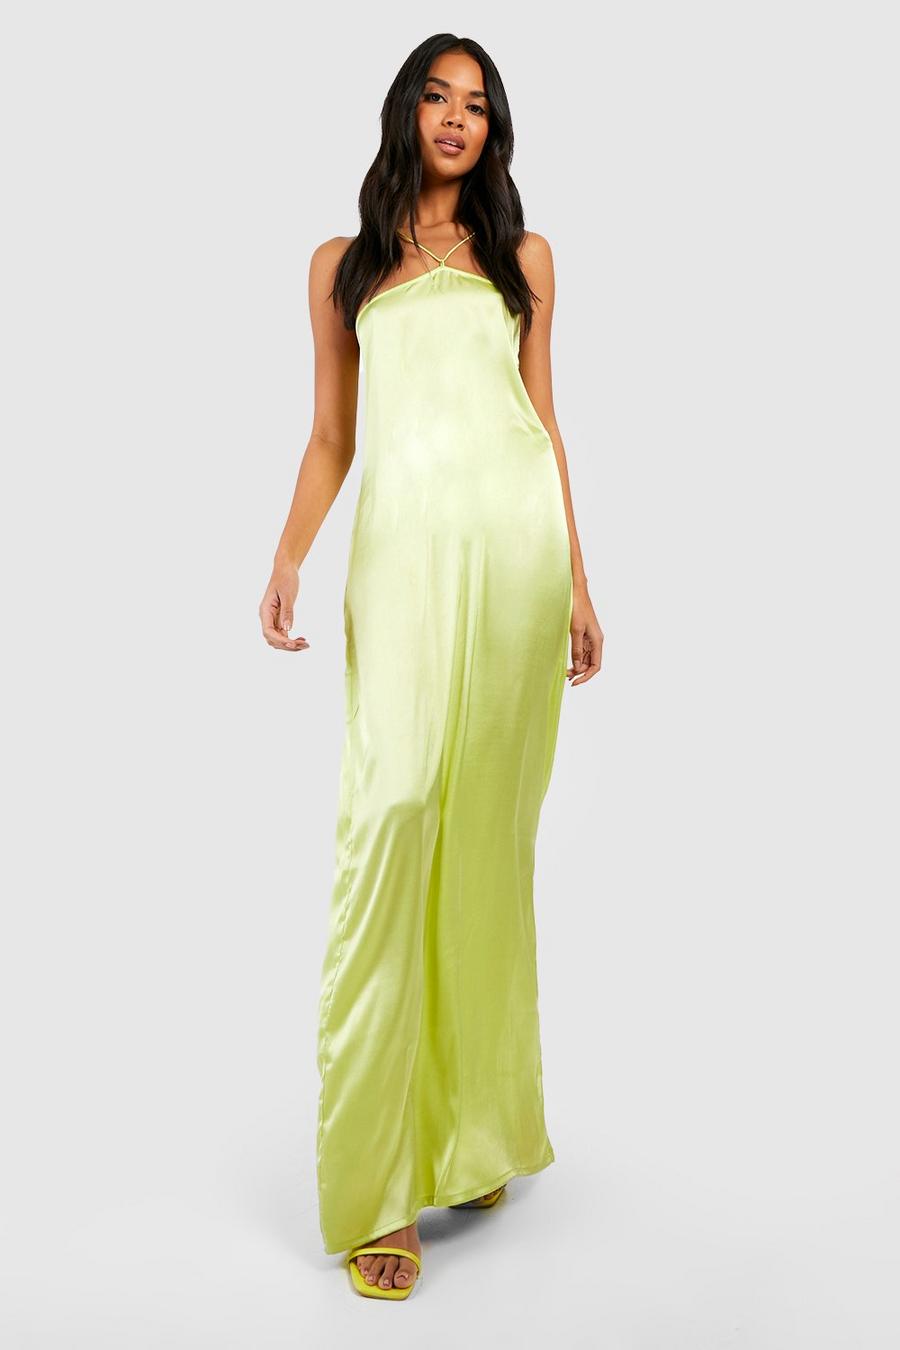 Chartreuse Satin Halter Slip Dress